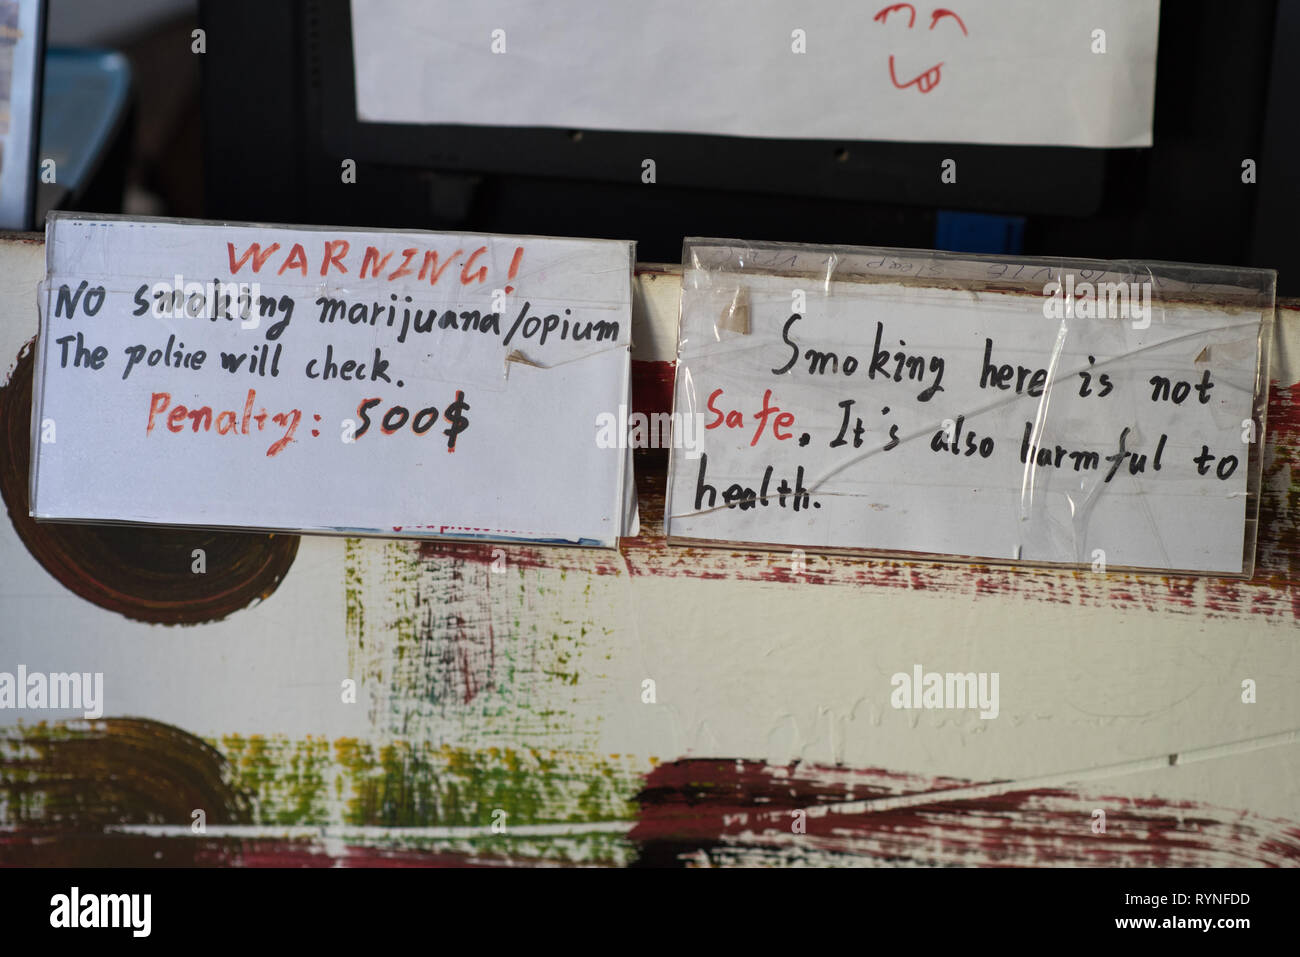 Vang Vieng, Laos - December 28, 2018: a hostel's notes warn smoking marijuana & opium is not allowed in the hostel & unhealthy. Stock Photo